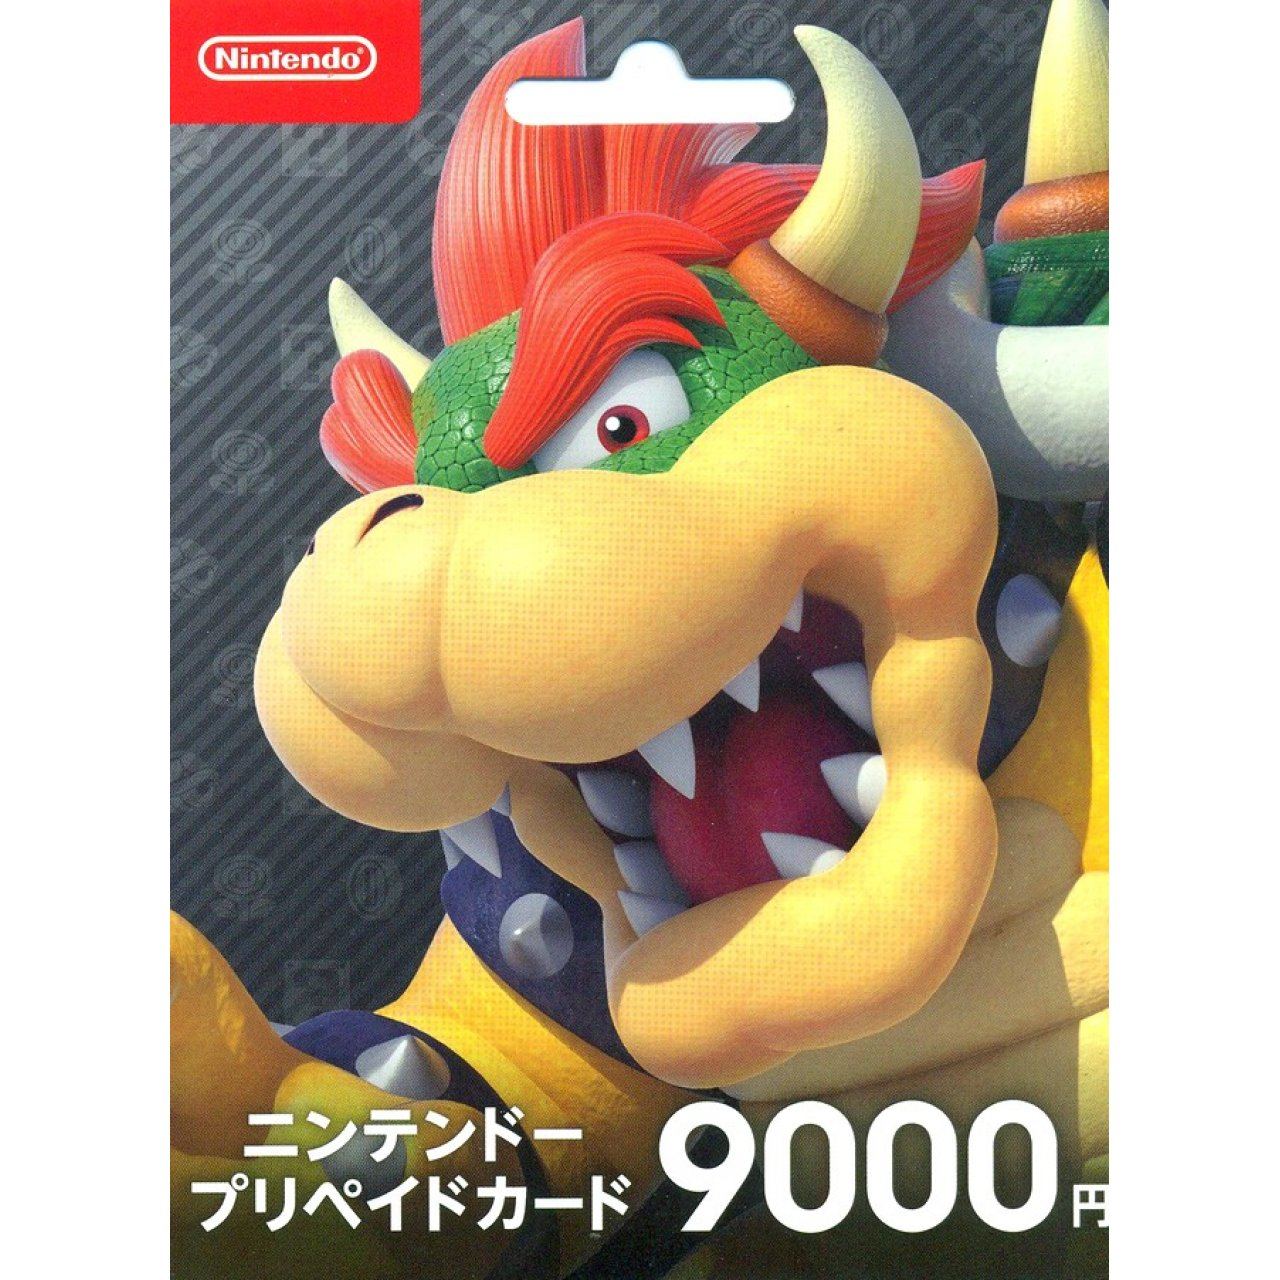 Patronise røre ved innovation Nintendo eShop Card 9000 YEN | Japan Account digital for Nintendo Switch